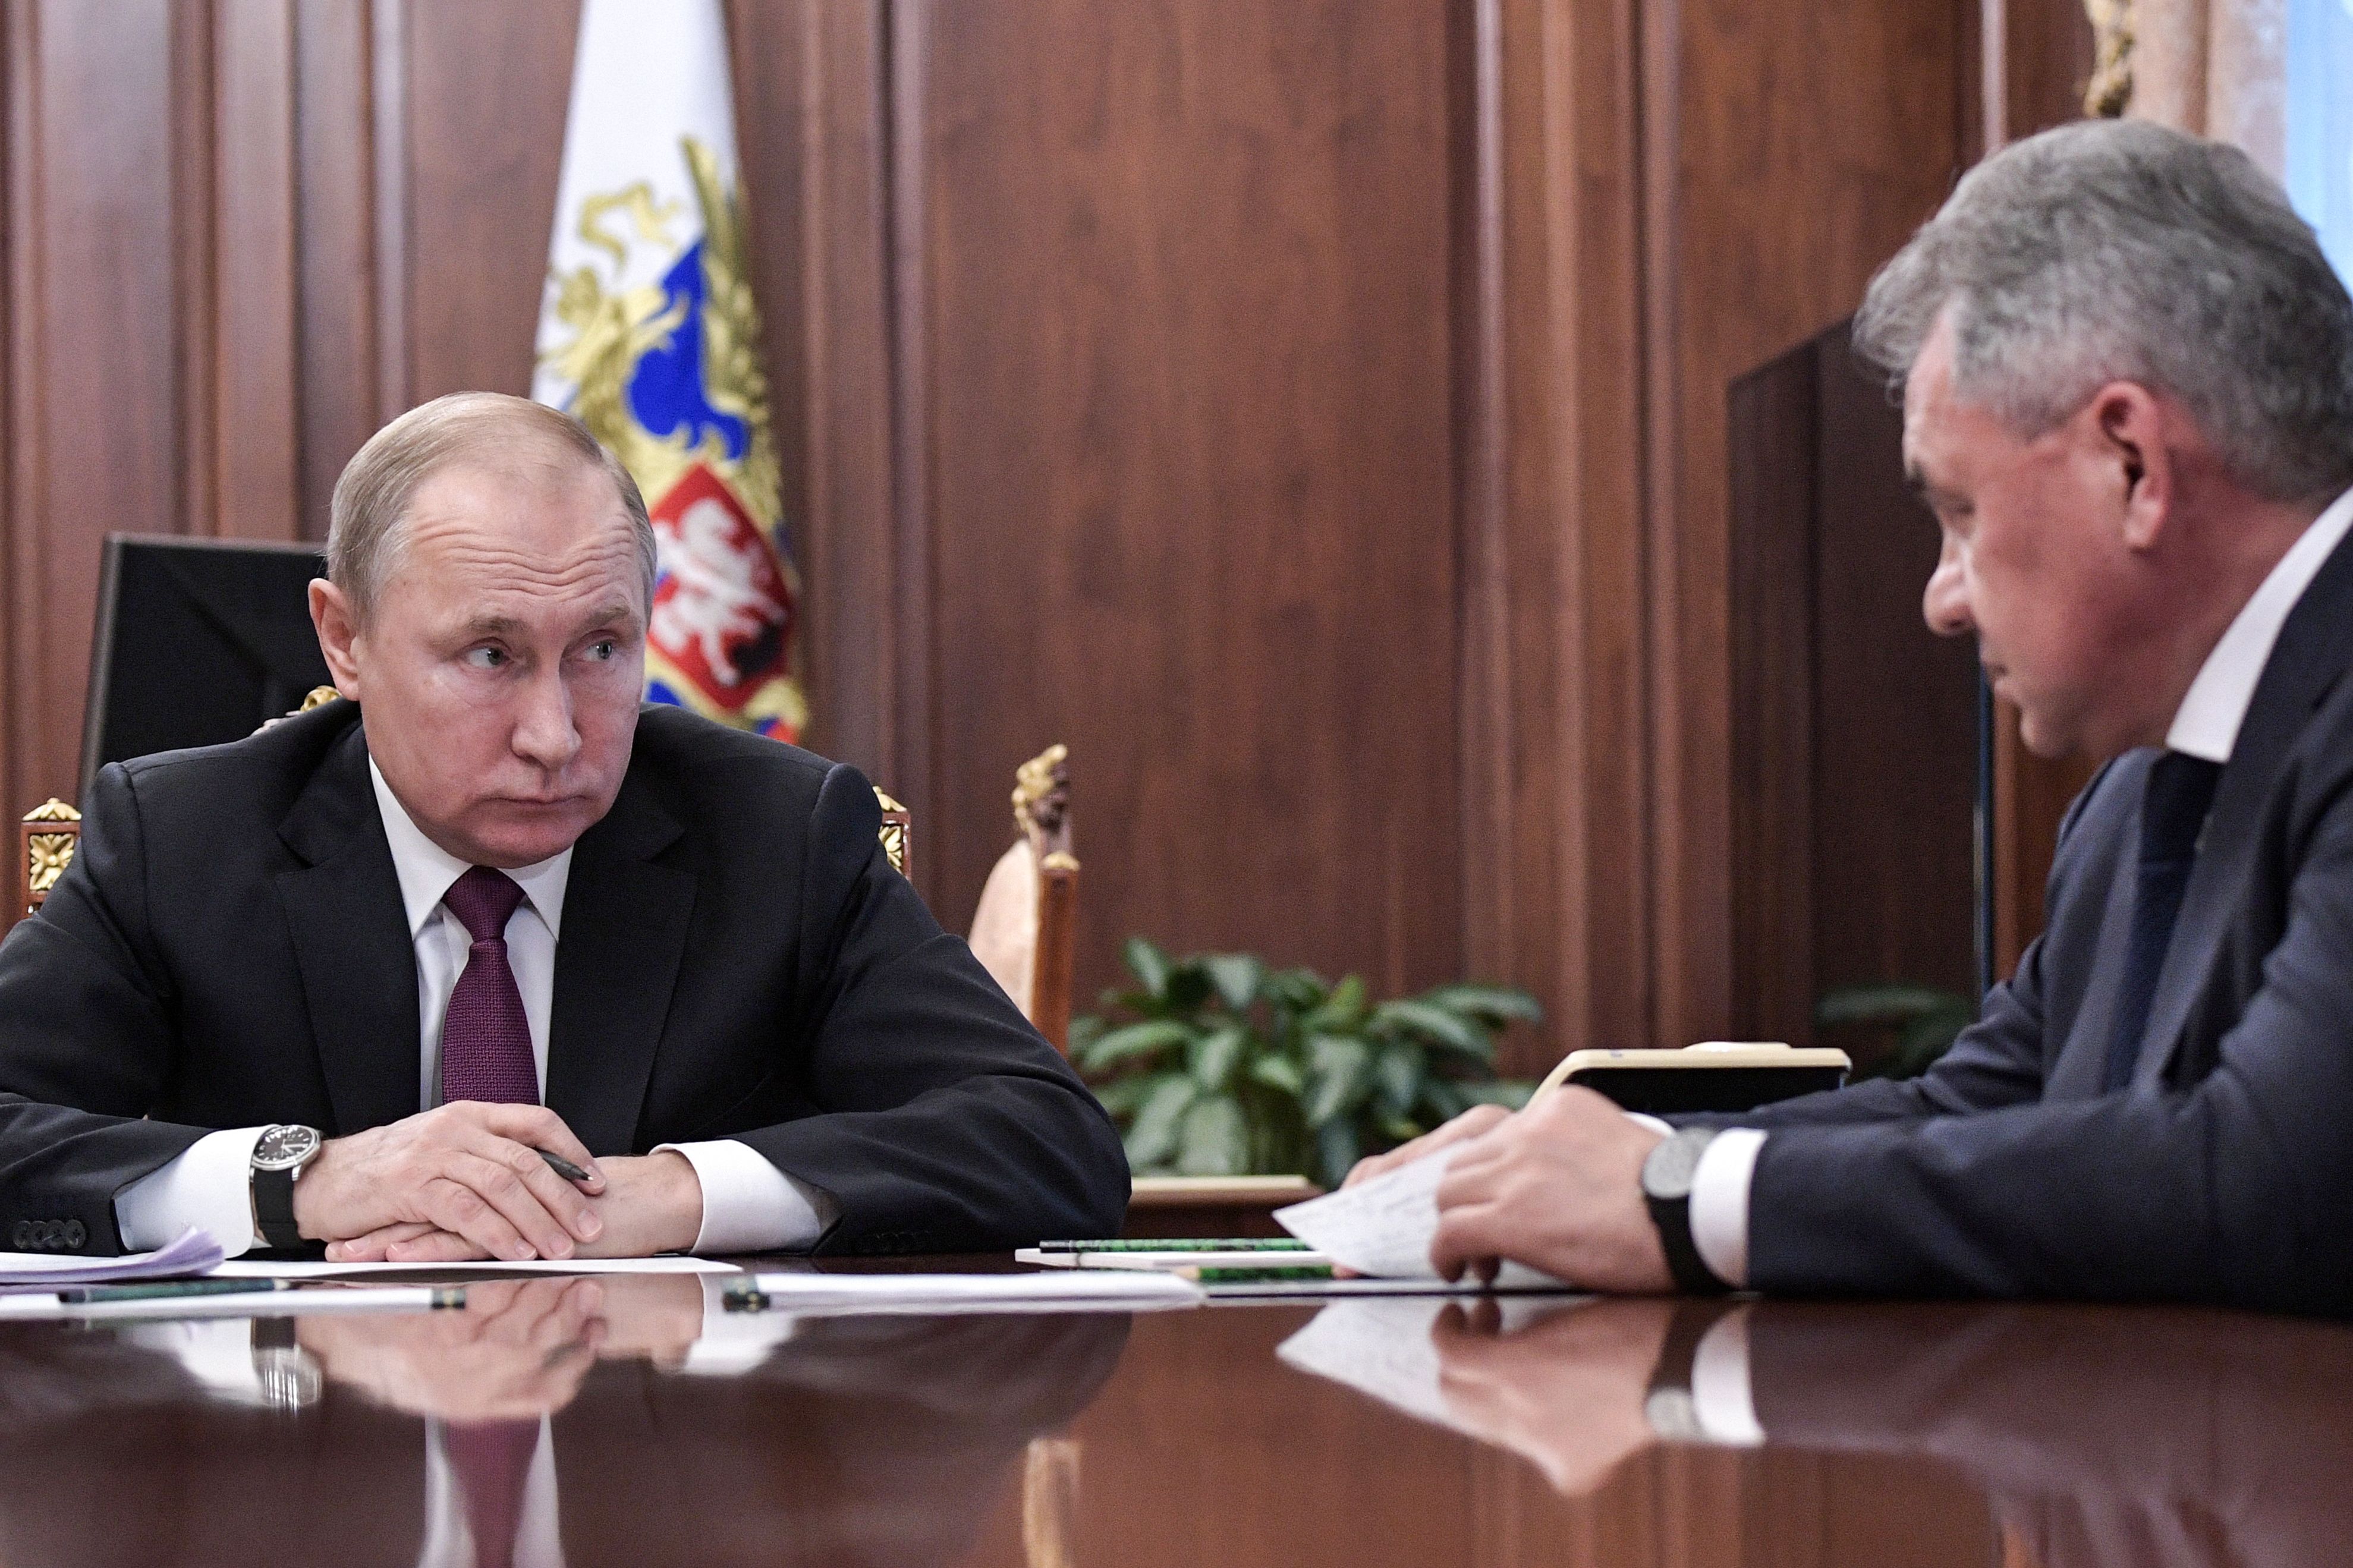 Putin signs decree suspending INF nuclear pact: Kremlin